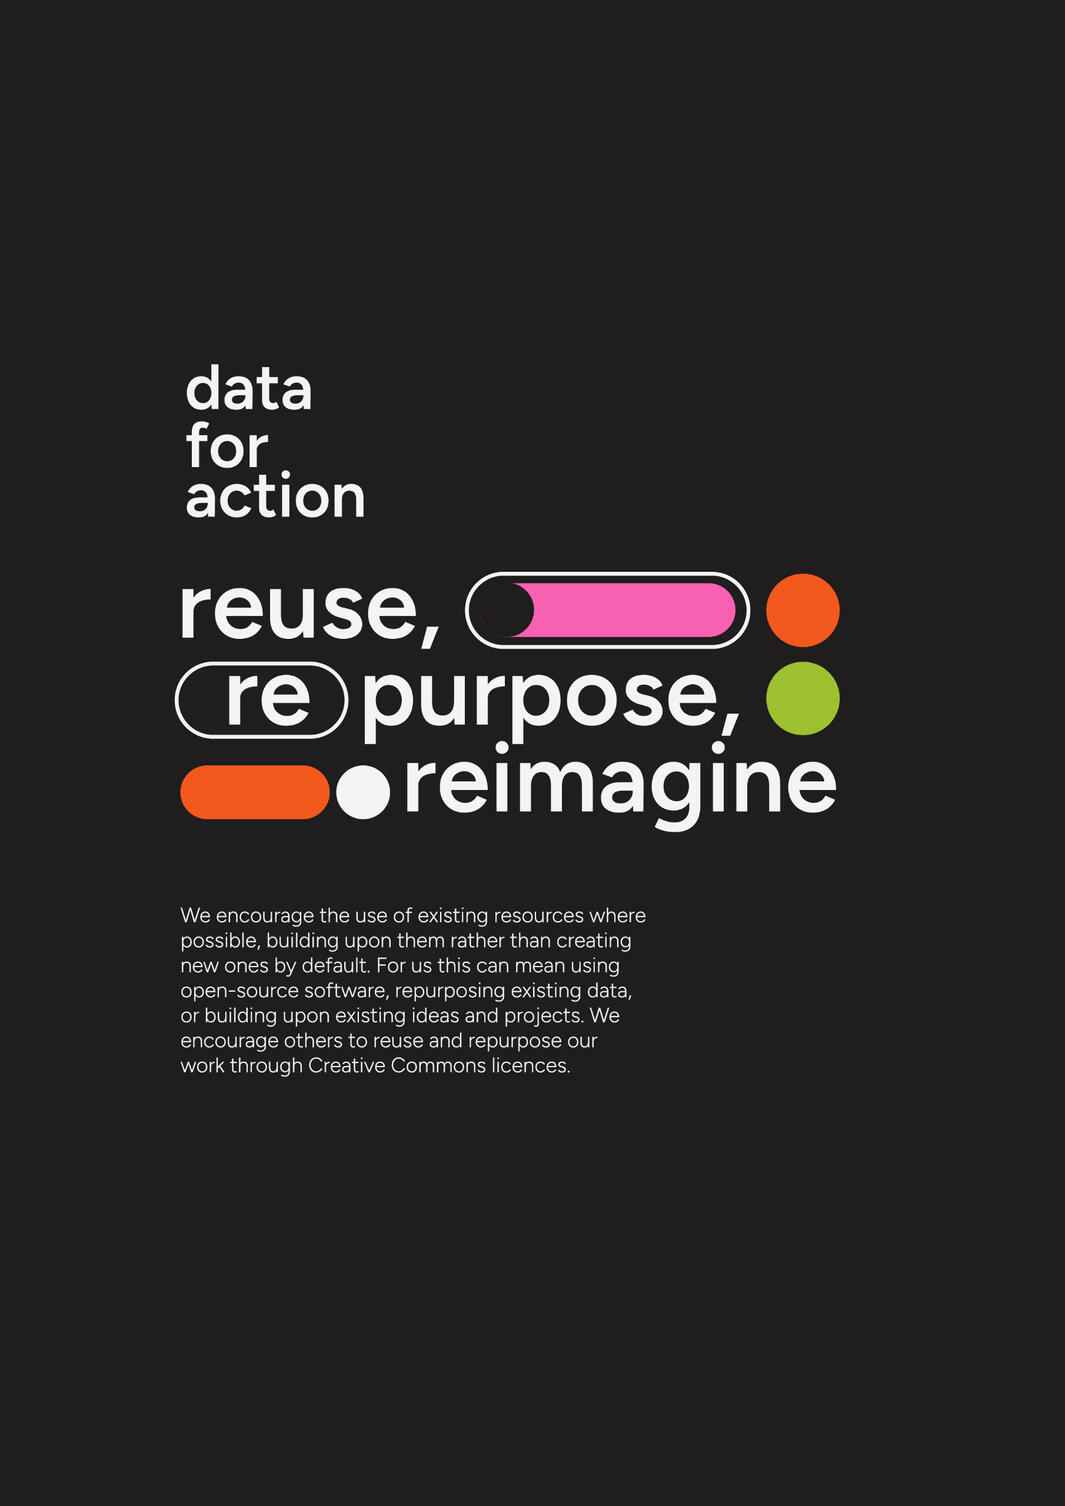 reuse, re-purpose, reimagine